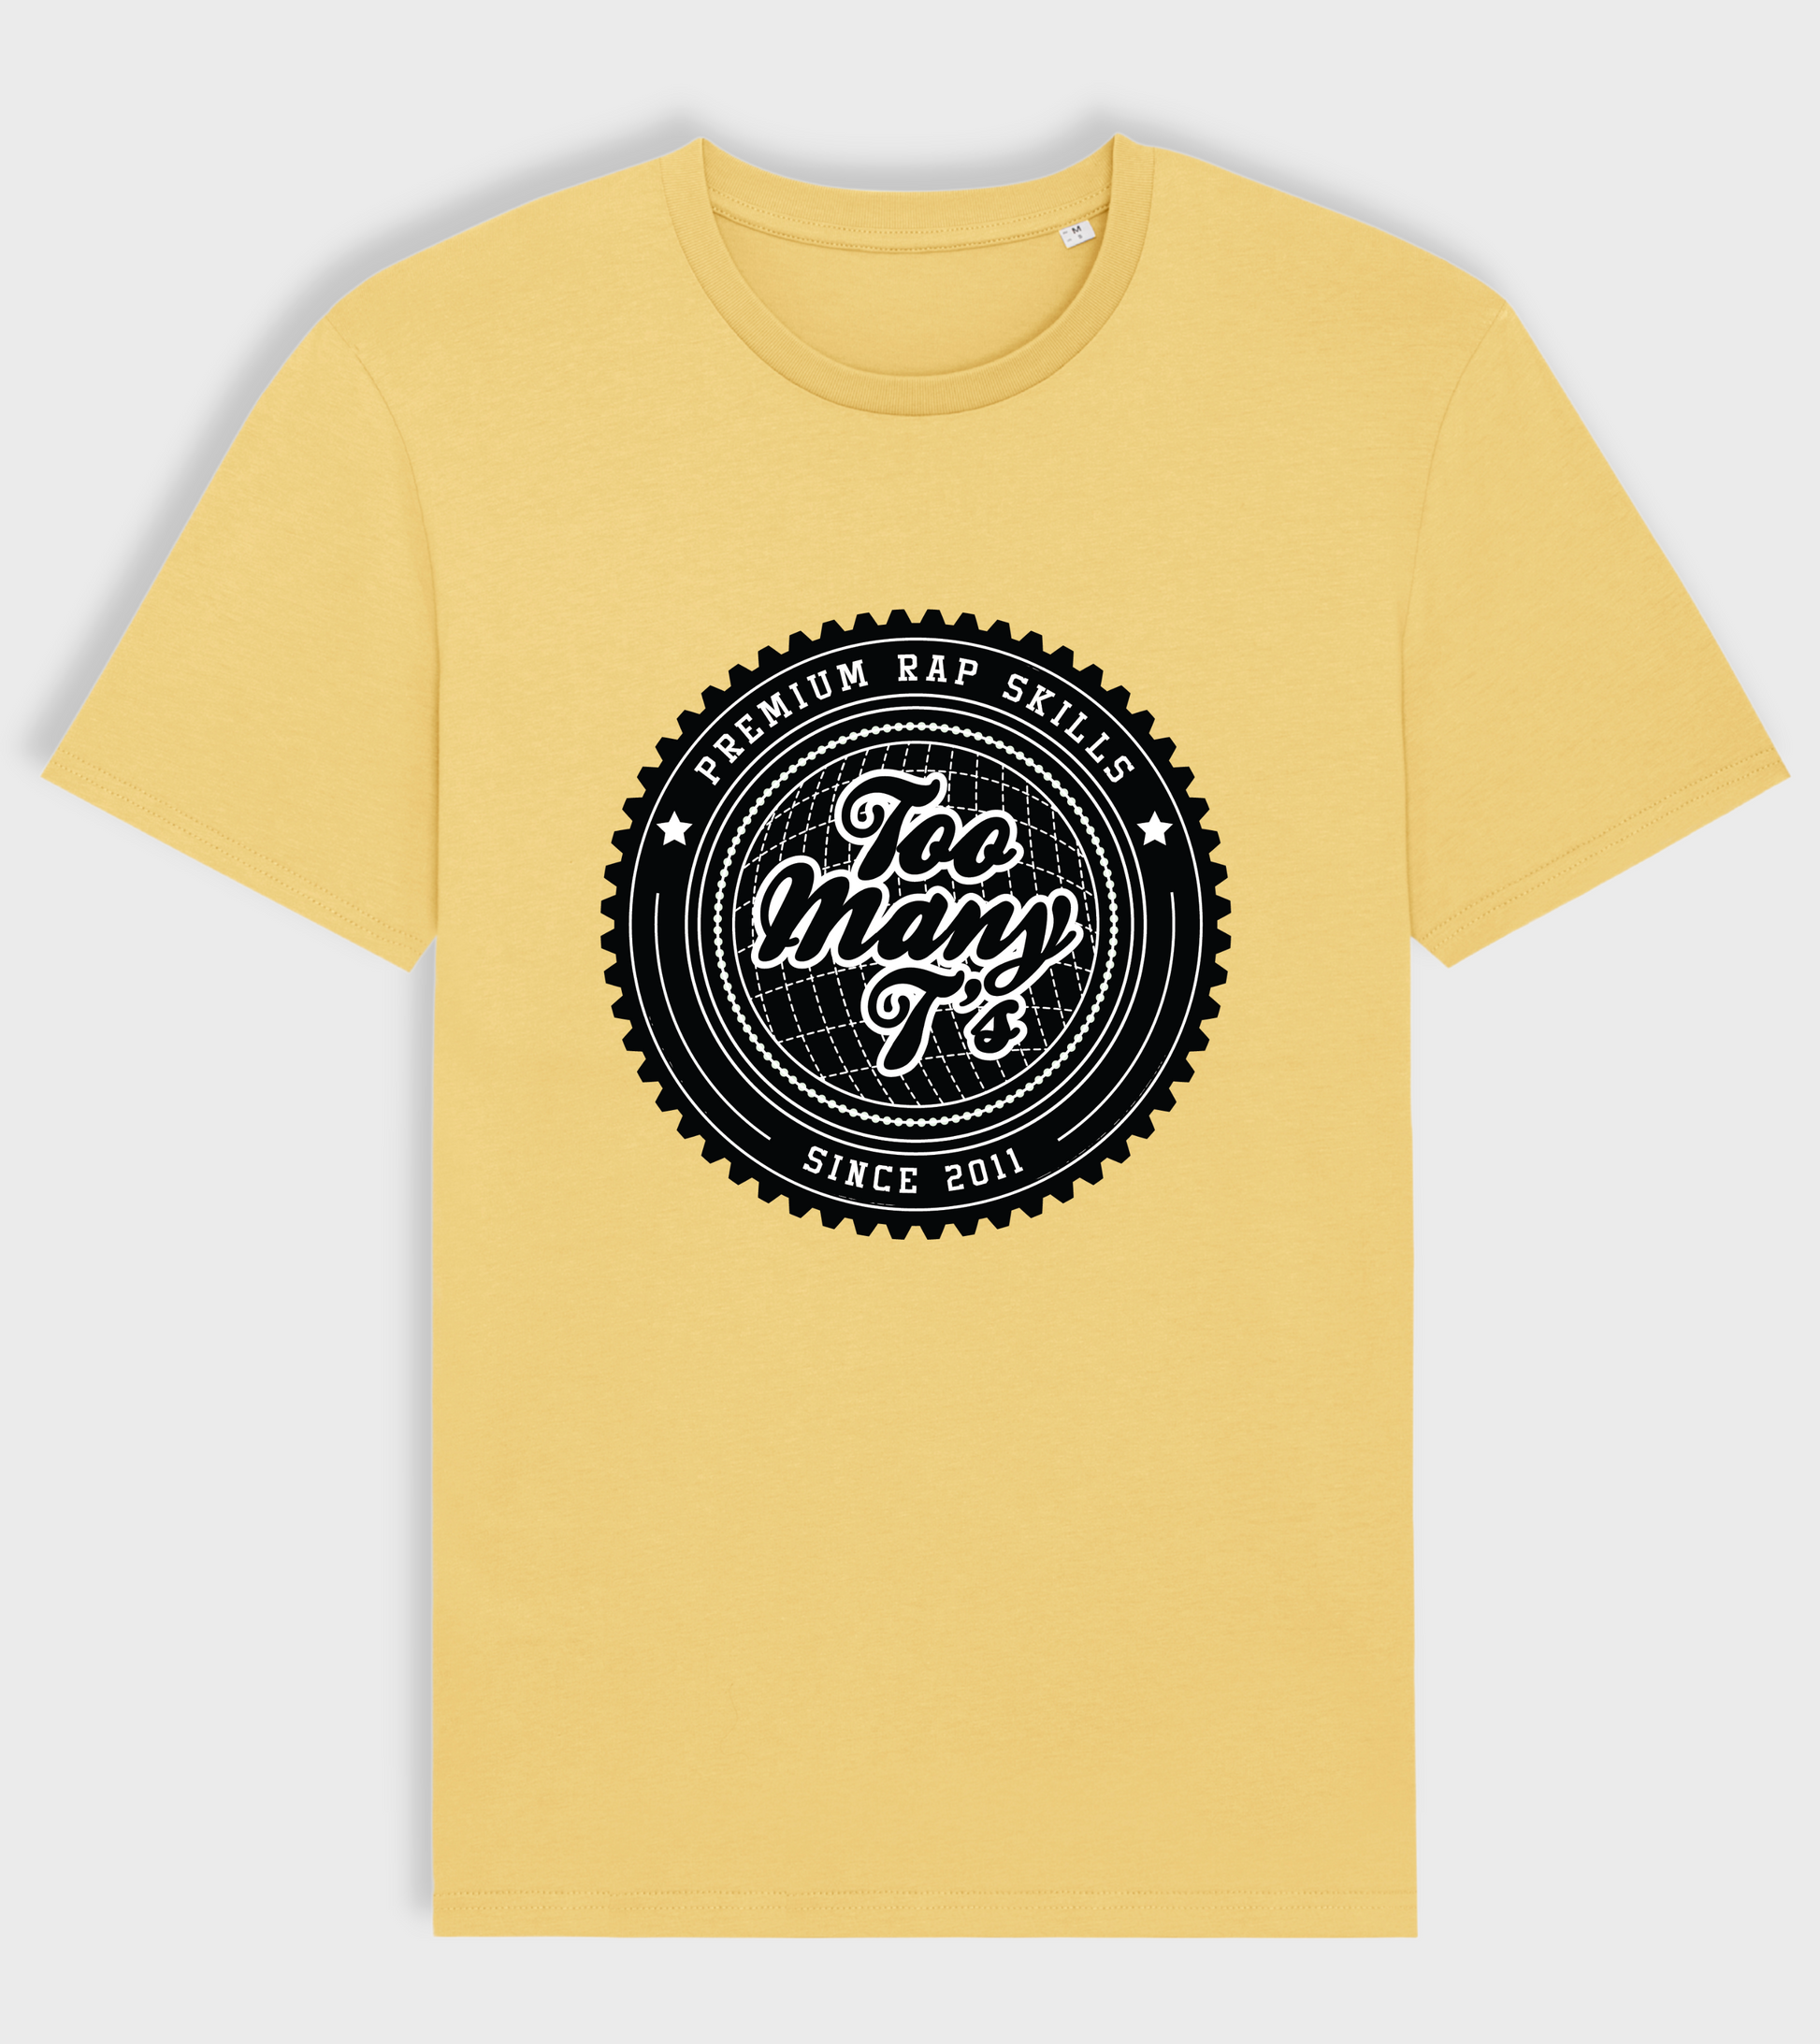 Yellow regular fit t-shirt with black premium rap skills design.